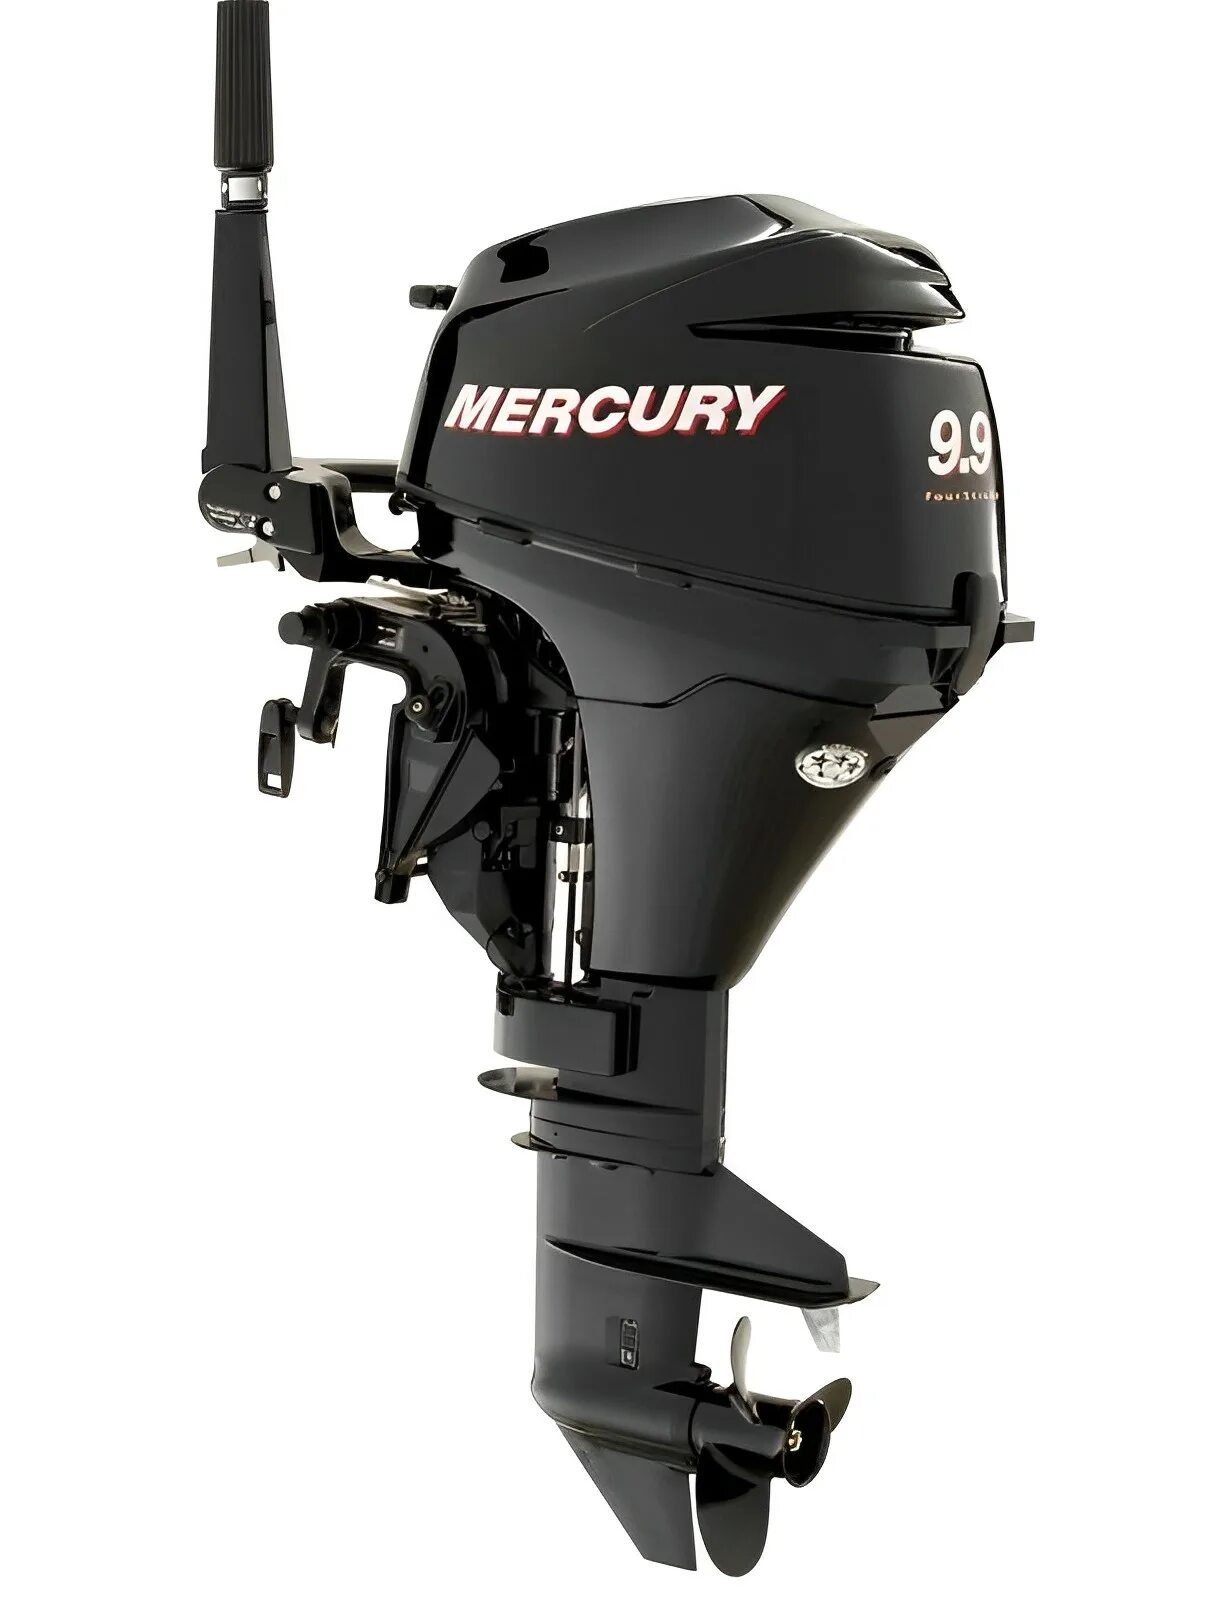 Мотор Mercury 9.9. Лодочный мотор Mercury me f 9.9 m. Лодочный мотор Mercury me f 8 m. Mercury 9.9 4х тактный. Лодочный мотор меркурий 9.9 купить